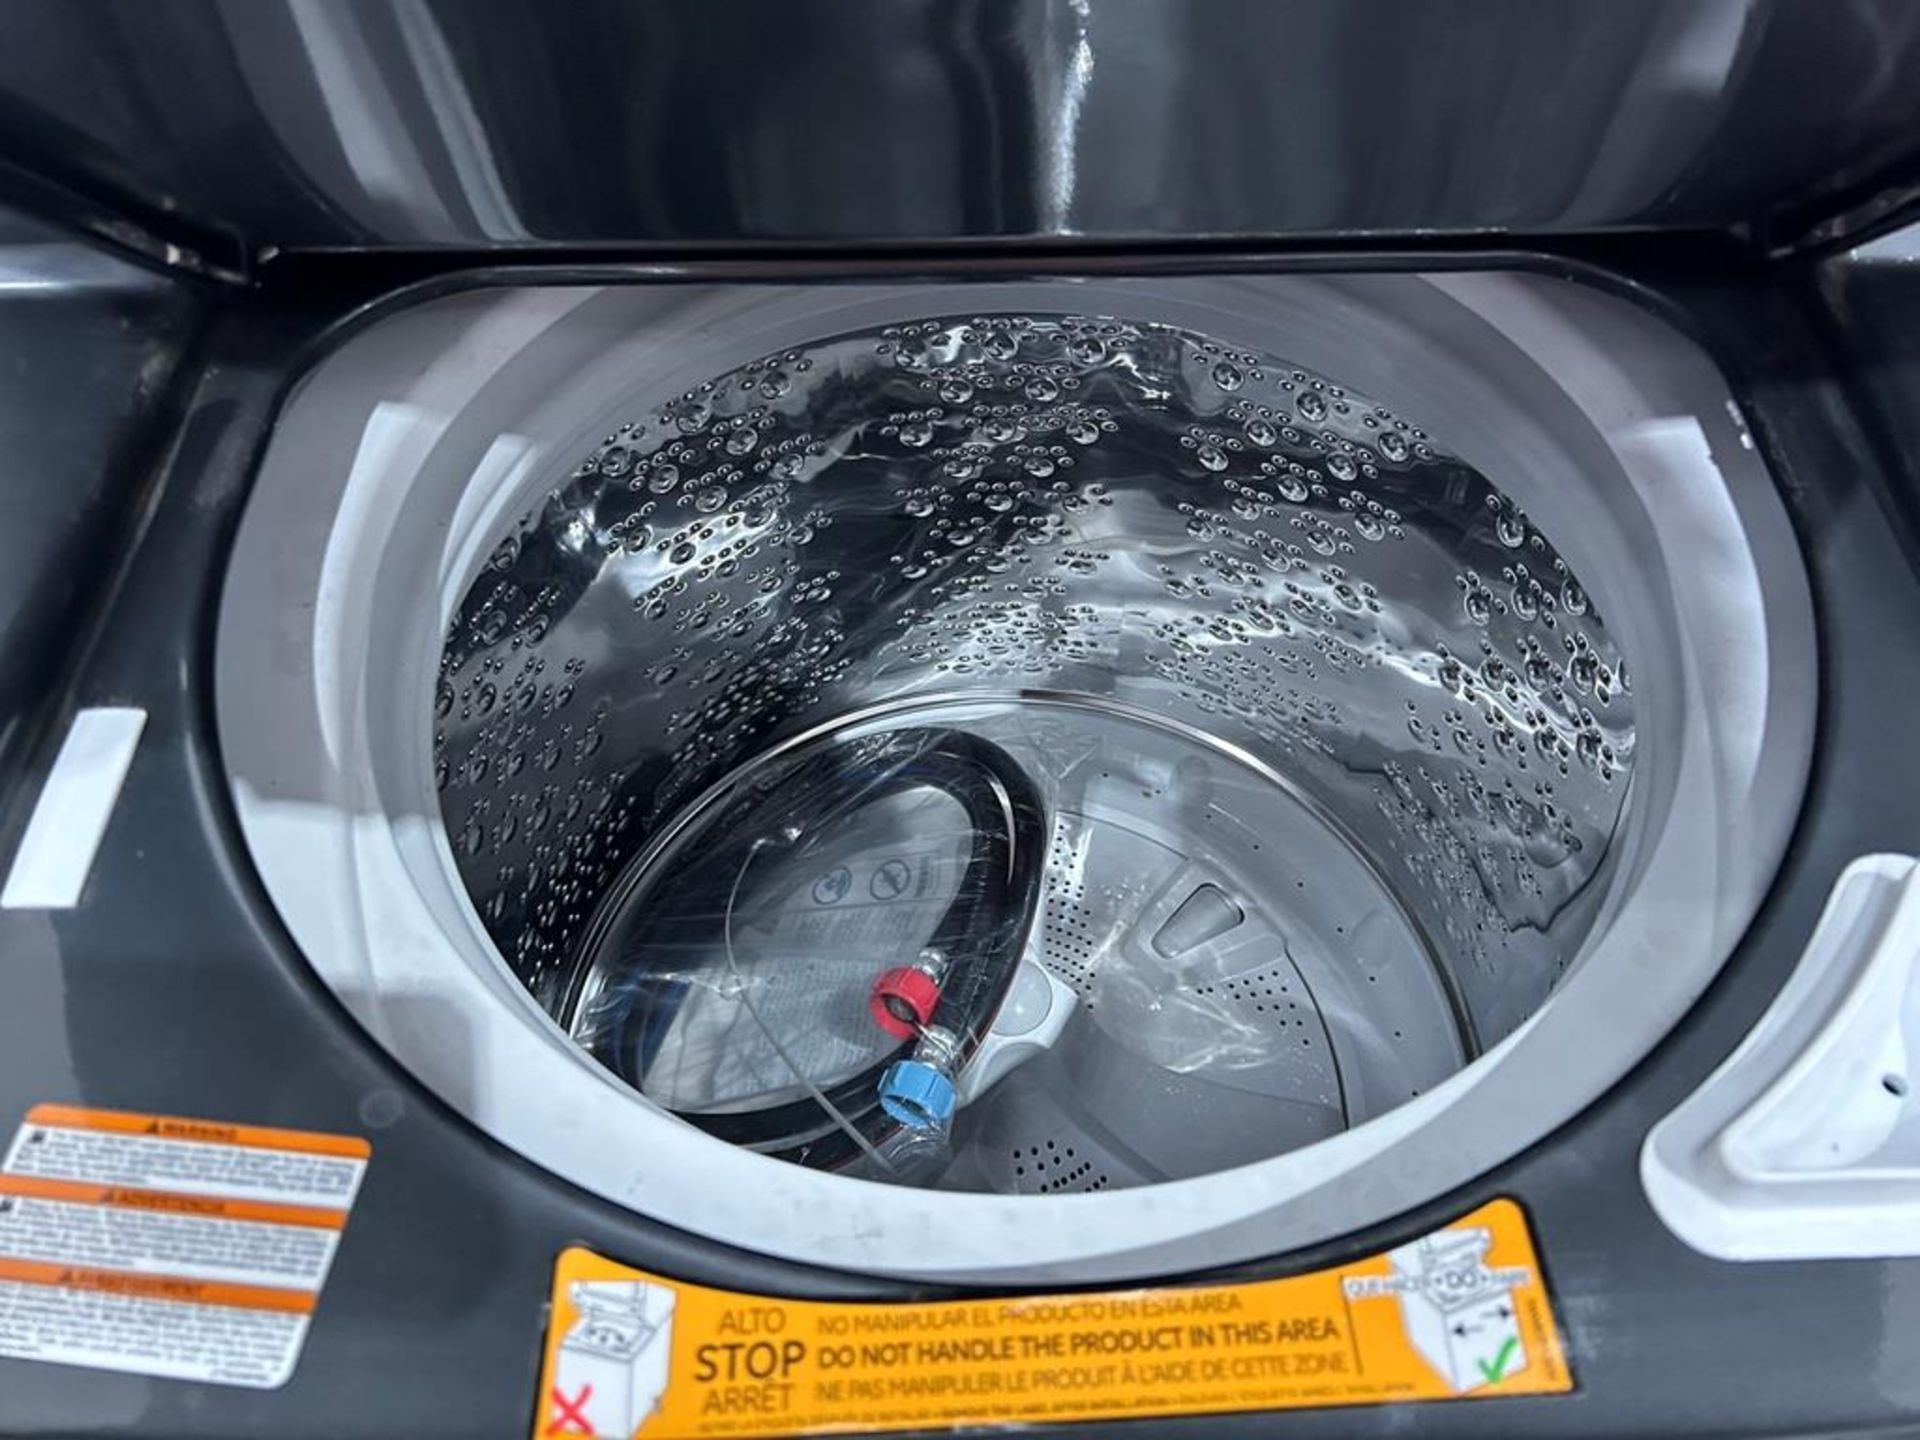 (NUEVO) Centro de lavado Marca MABE, Modelo MCL2040PSDG0, Serie 02035, Color NEGRO (Golpe superior) - Bild 5 aus 9